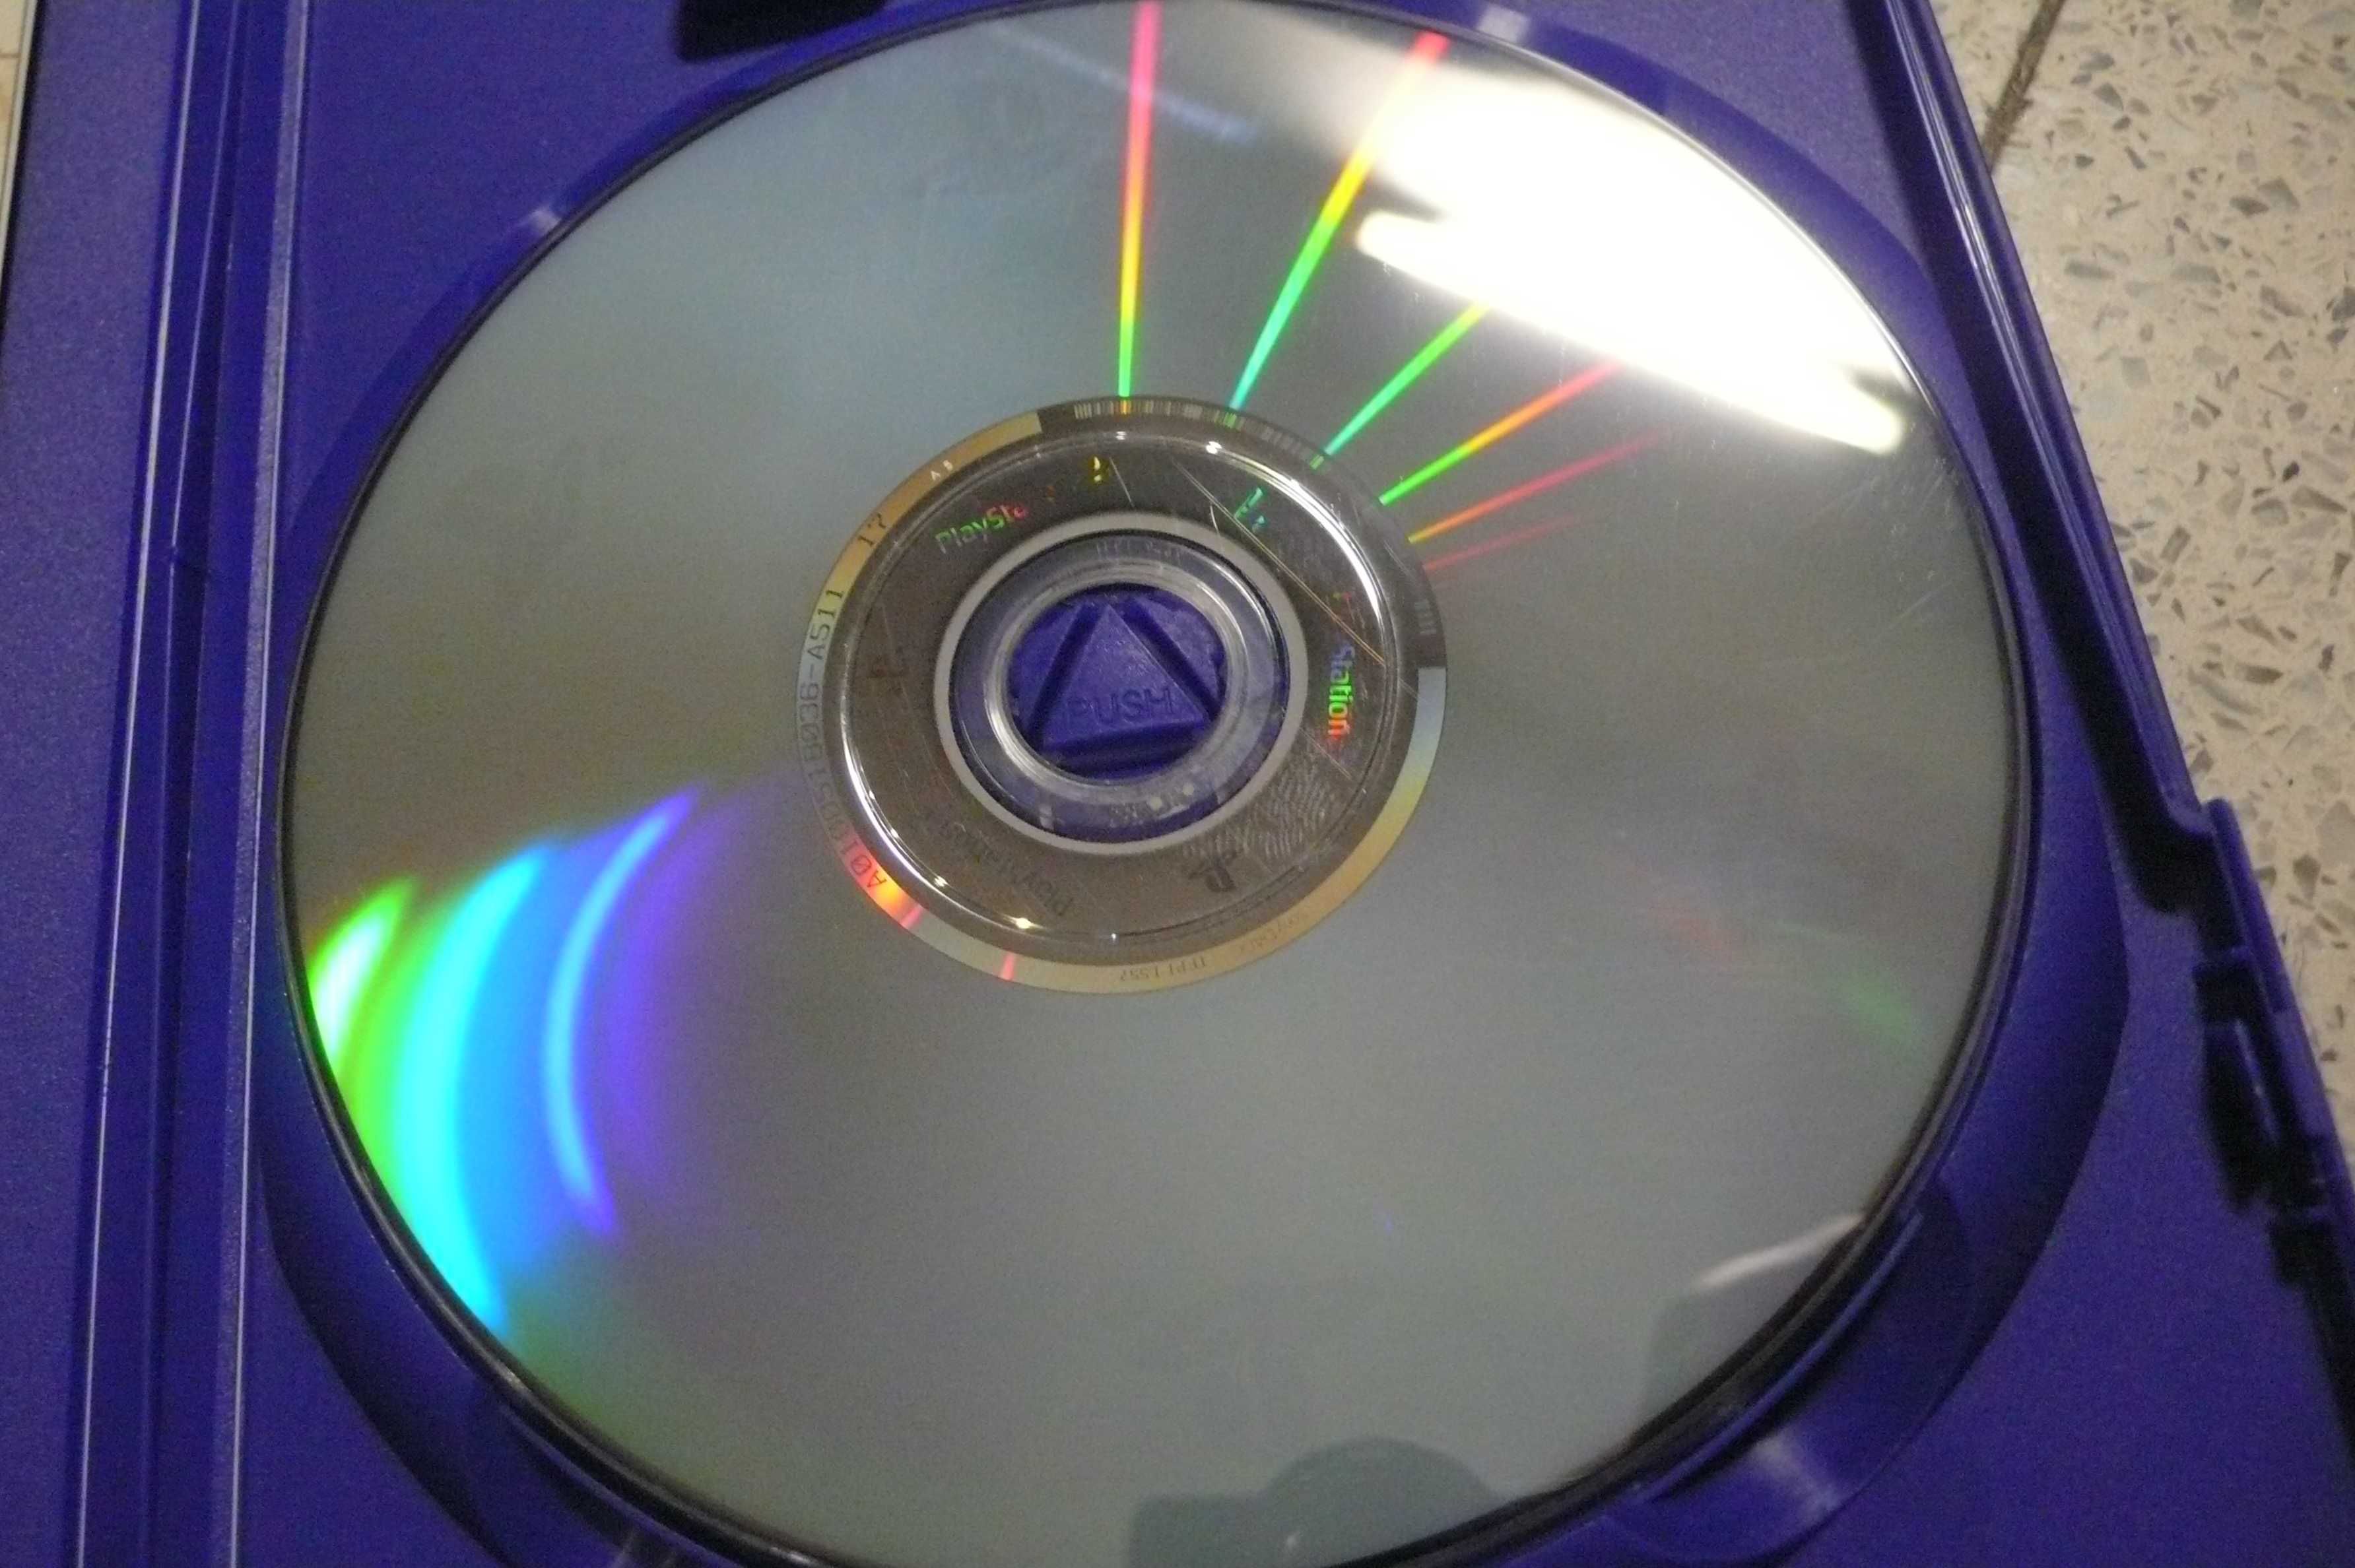 Hyper Street Fighter II ( Playstation 2 ) PS2